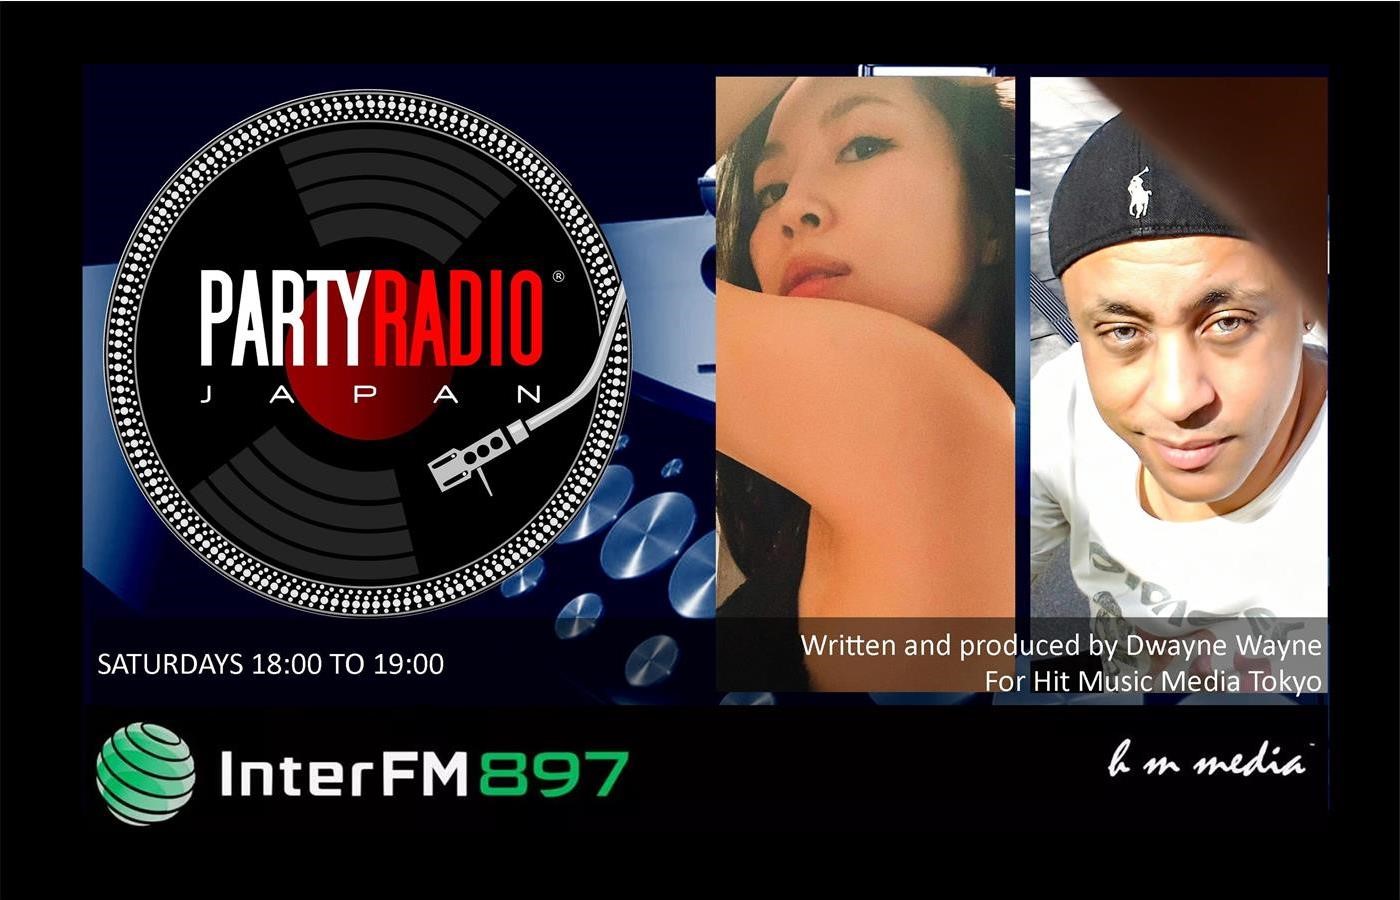 Party Radio Japan